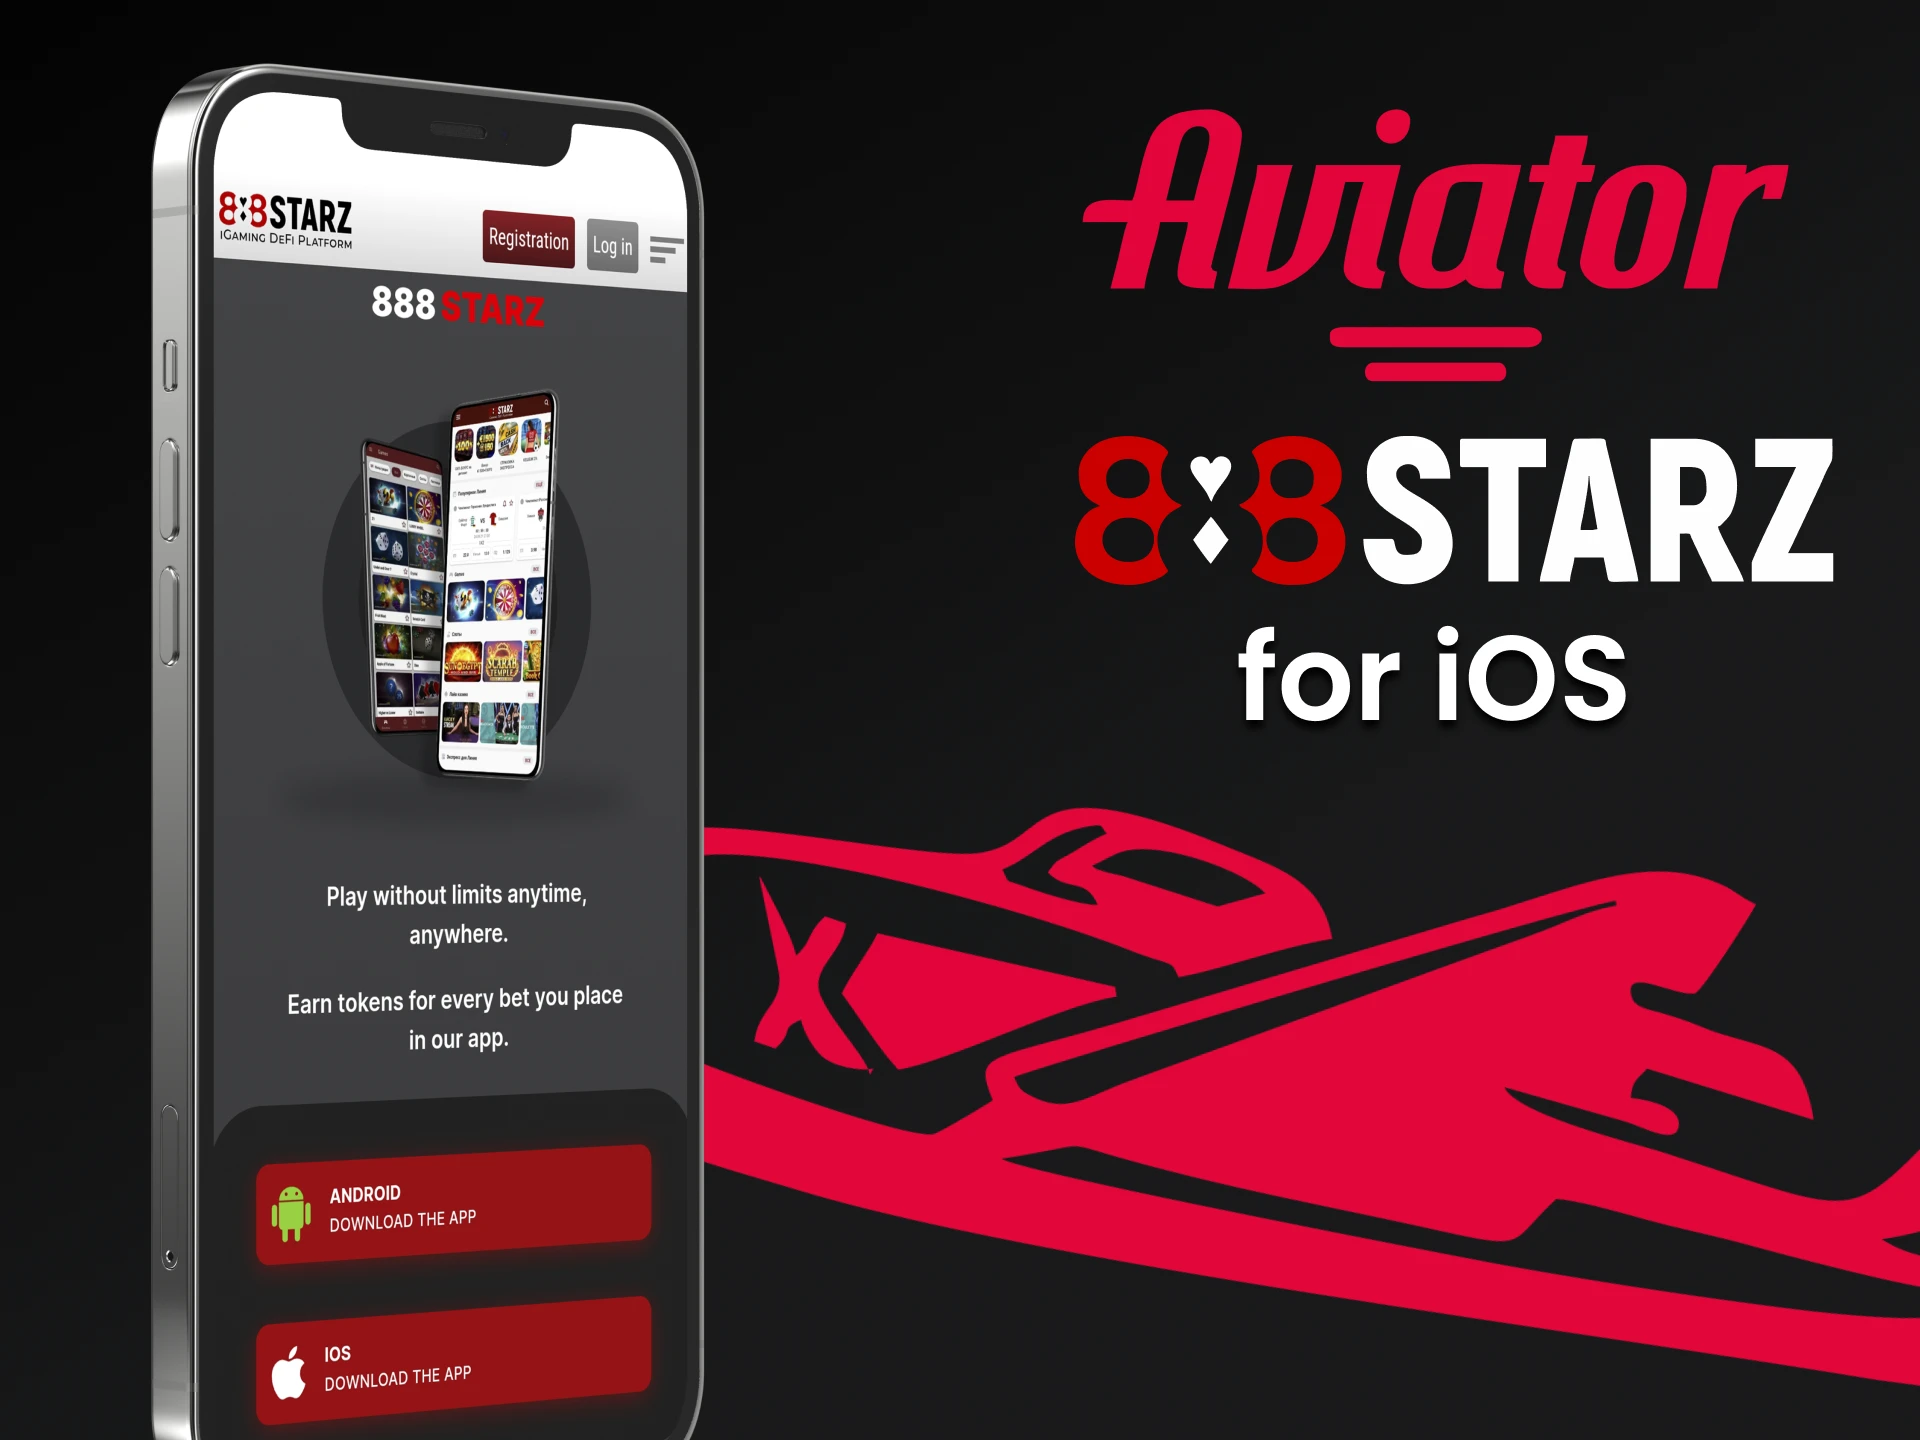 Install the 888starz app for iOS.